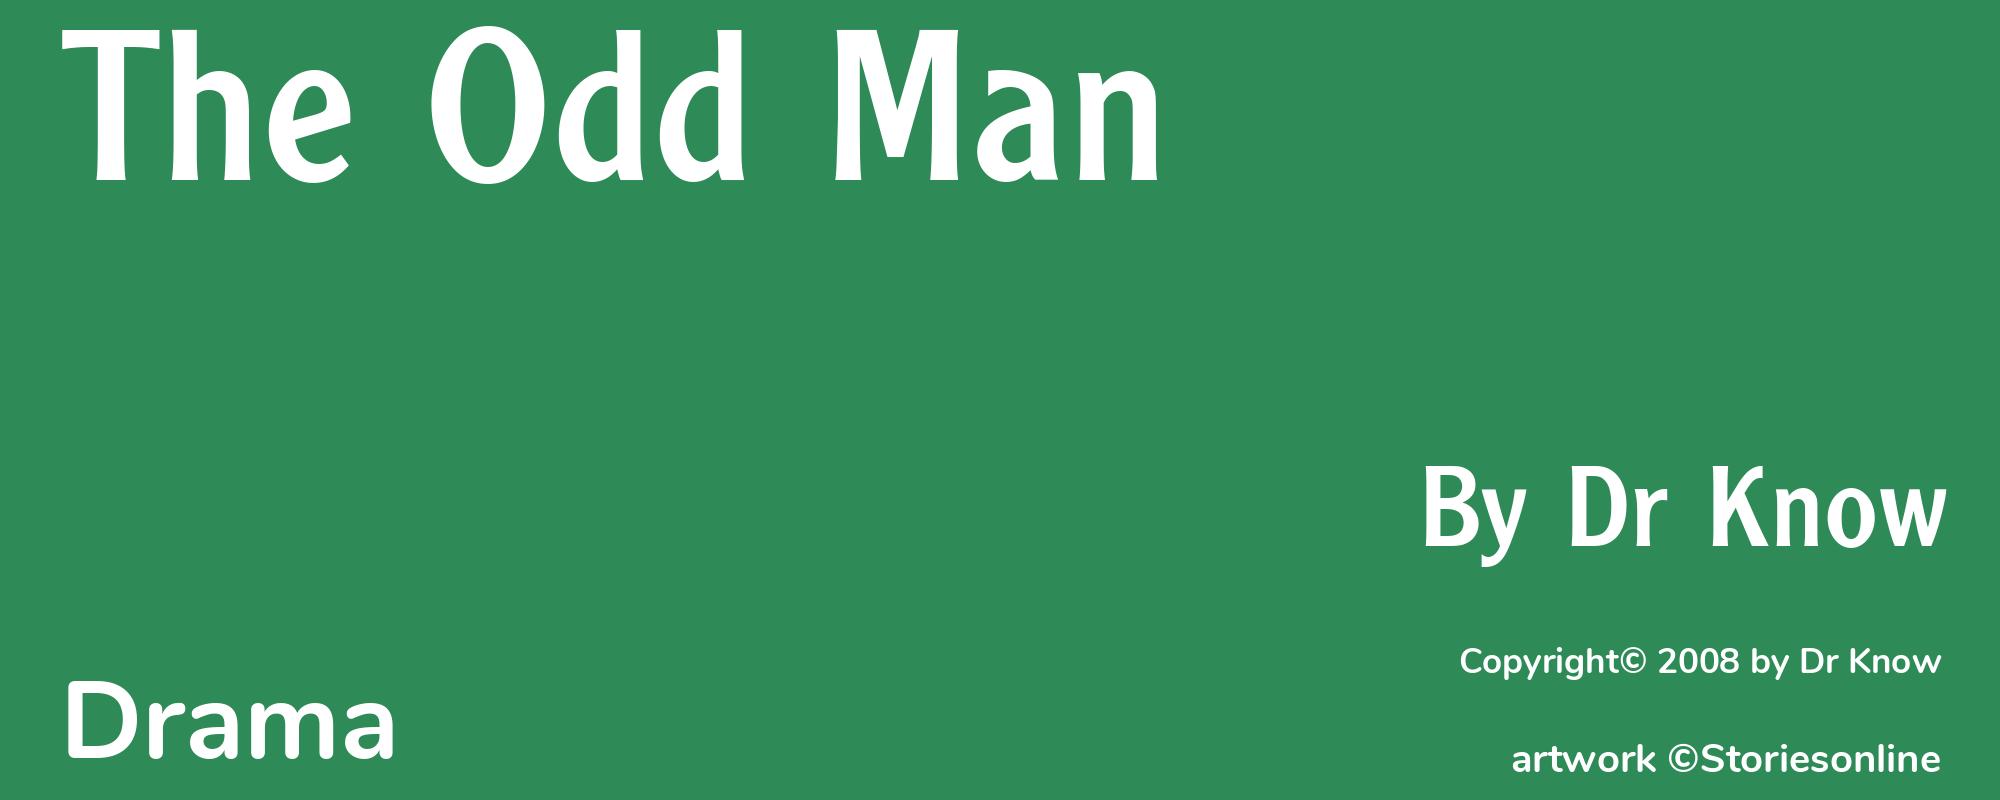 The Odd Man - Cover